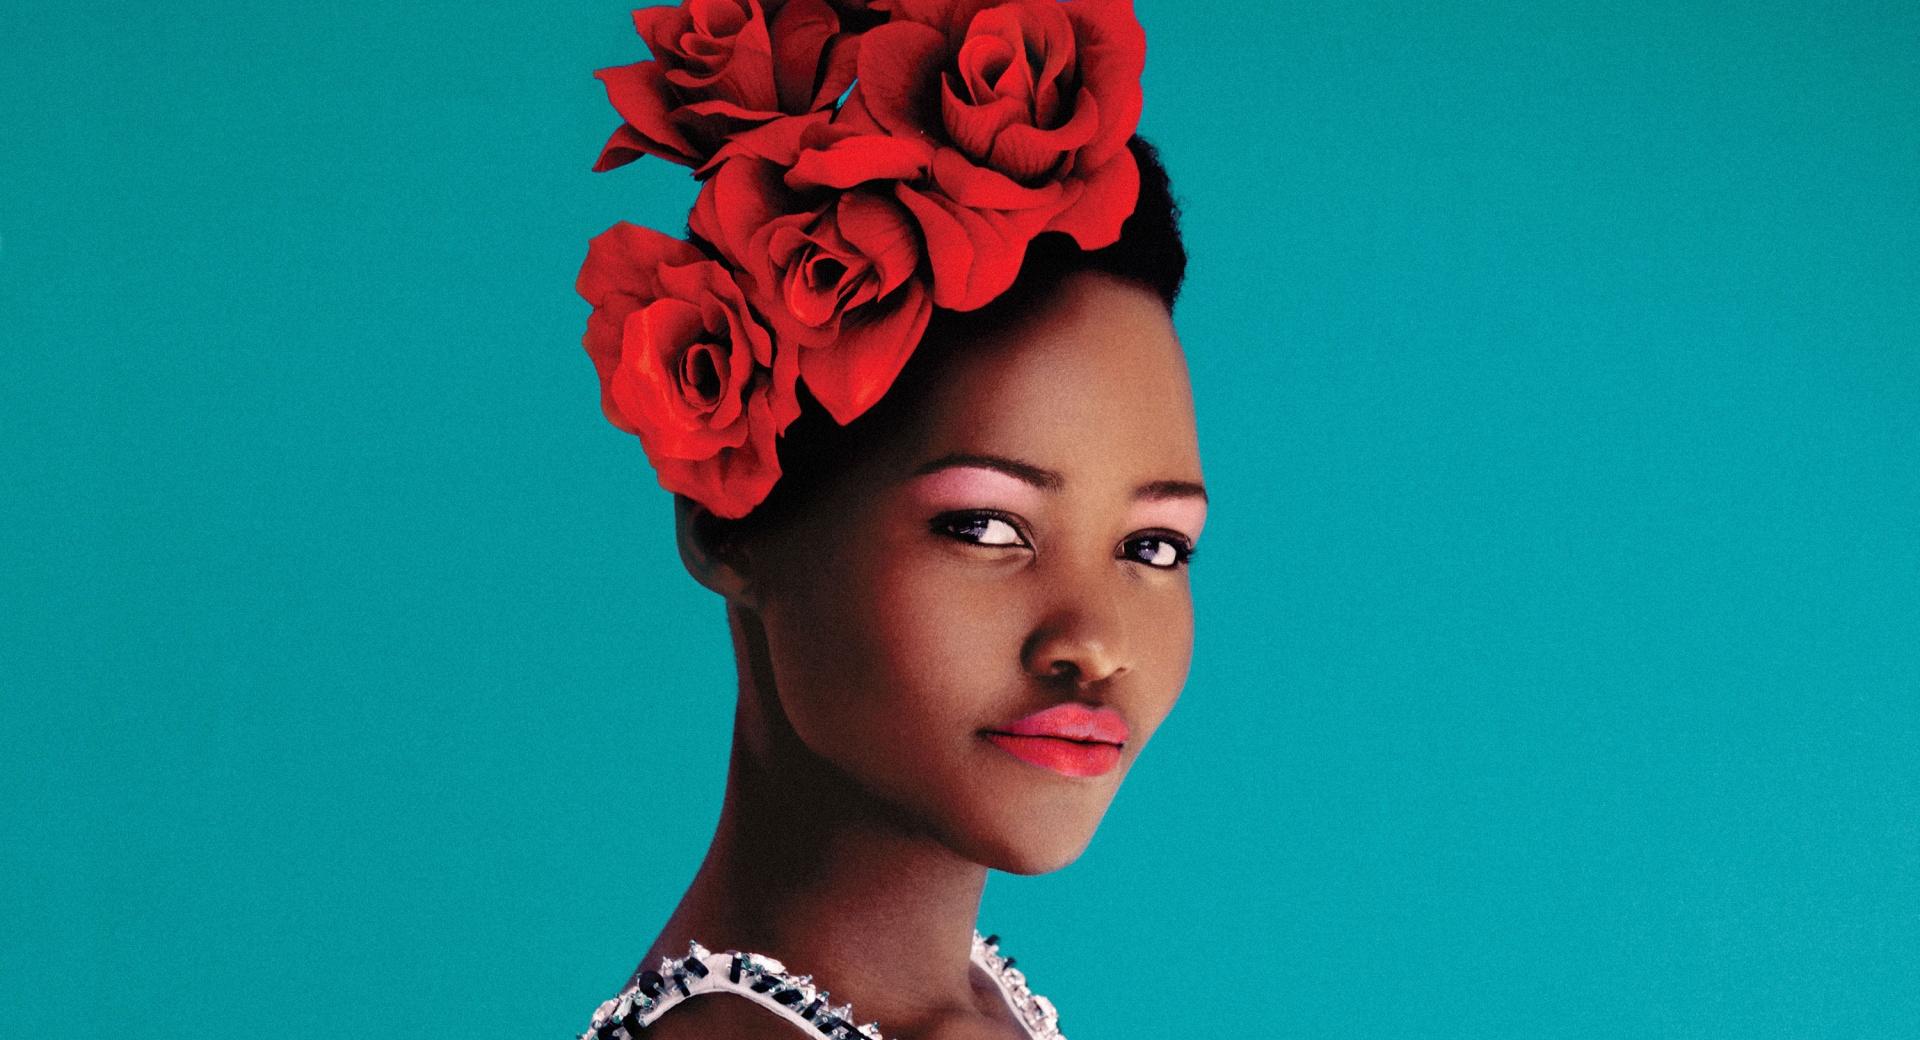 Lupita Nyongo Portrait at 320 x 480 iPhone size wallpapers HD quality